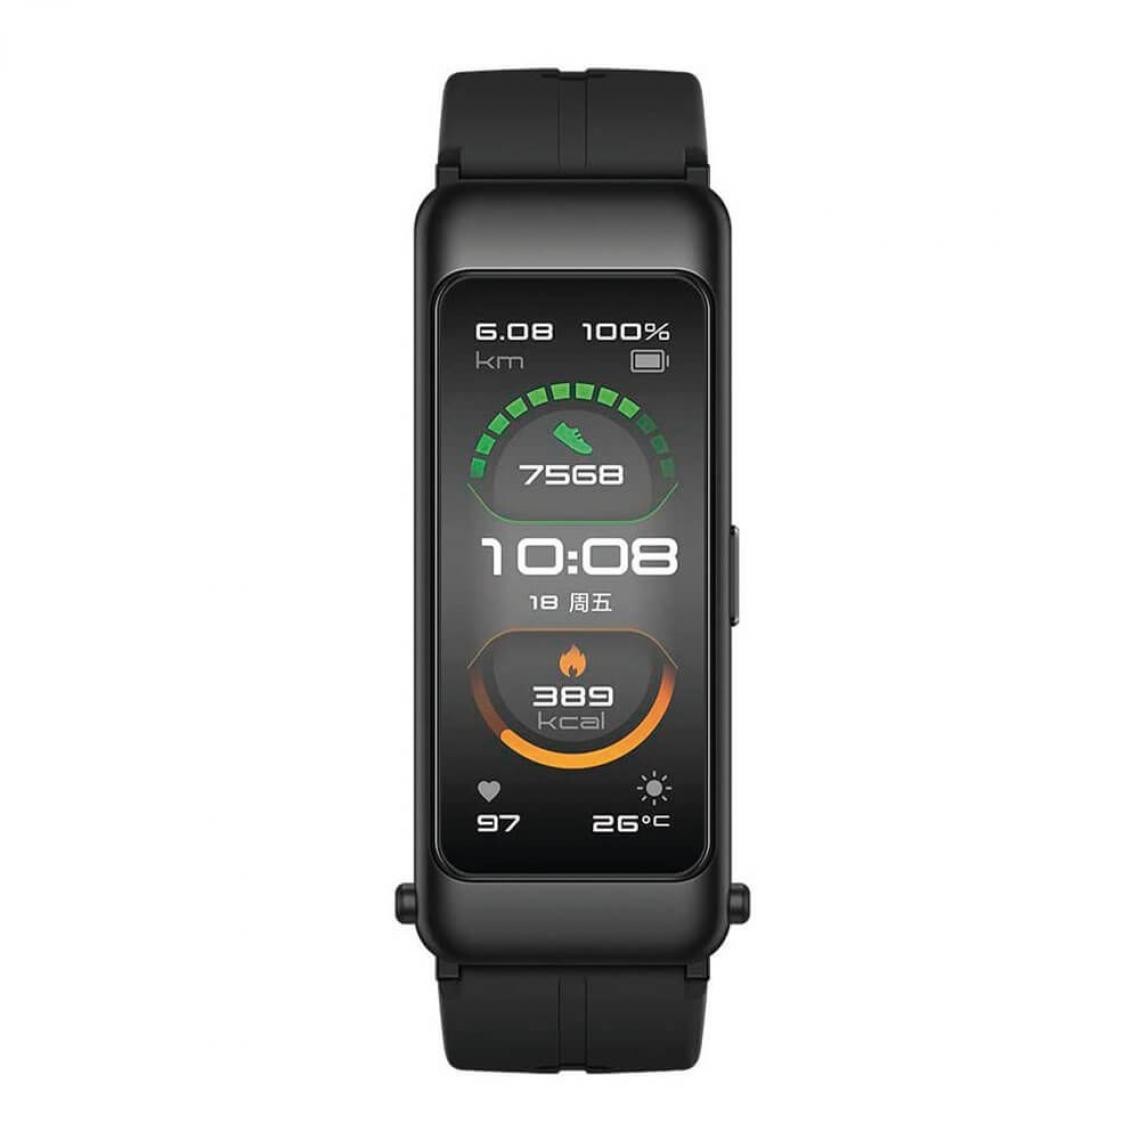 Huawei - Huawei Talkband B6 Sport Noir (Graphite Black) FDS-B19 - Bracelet connecté